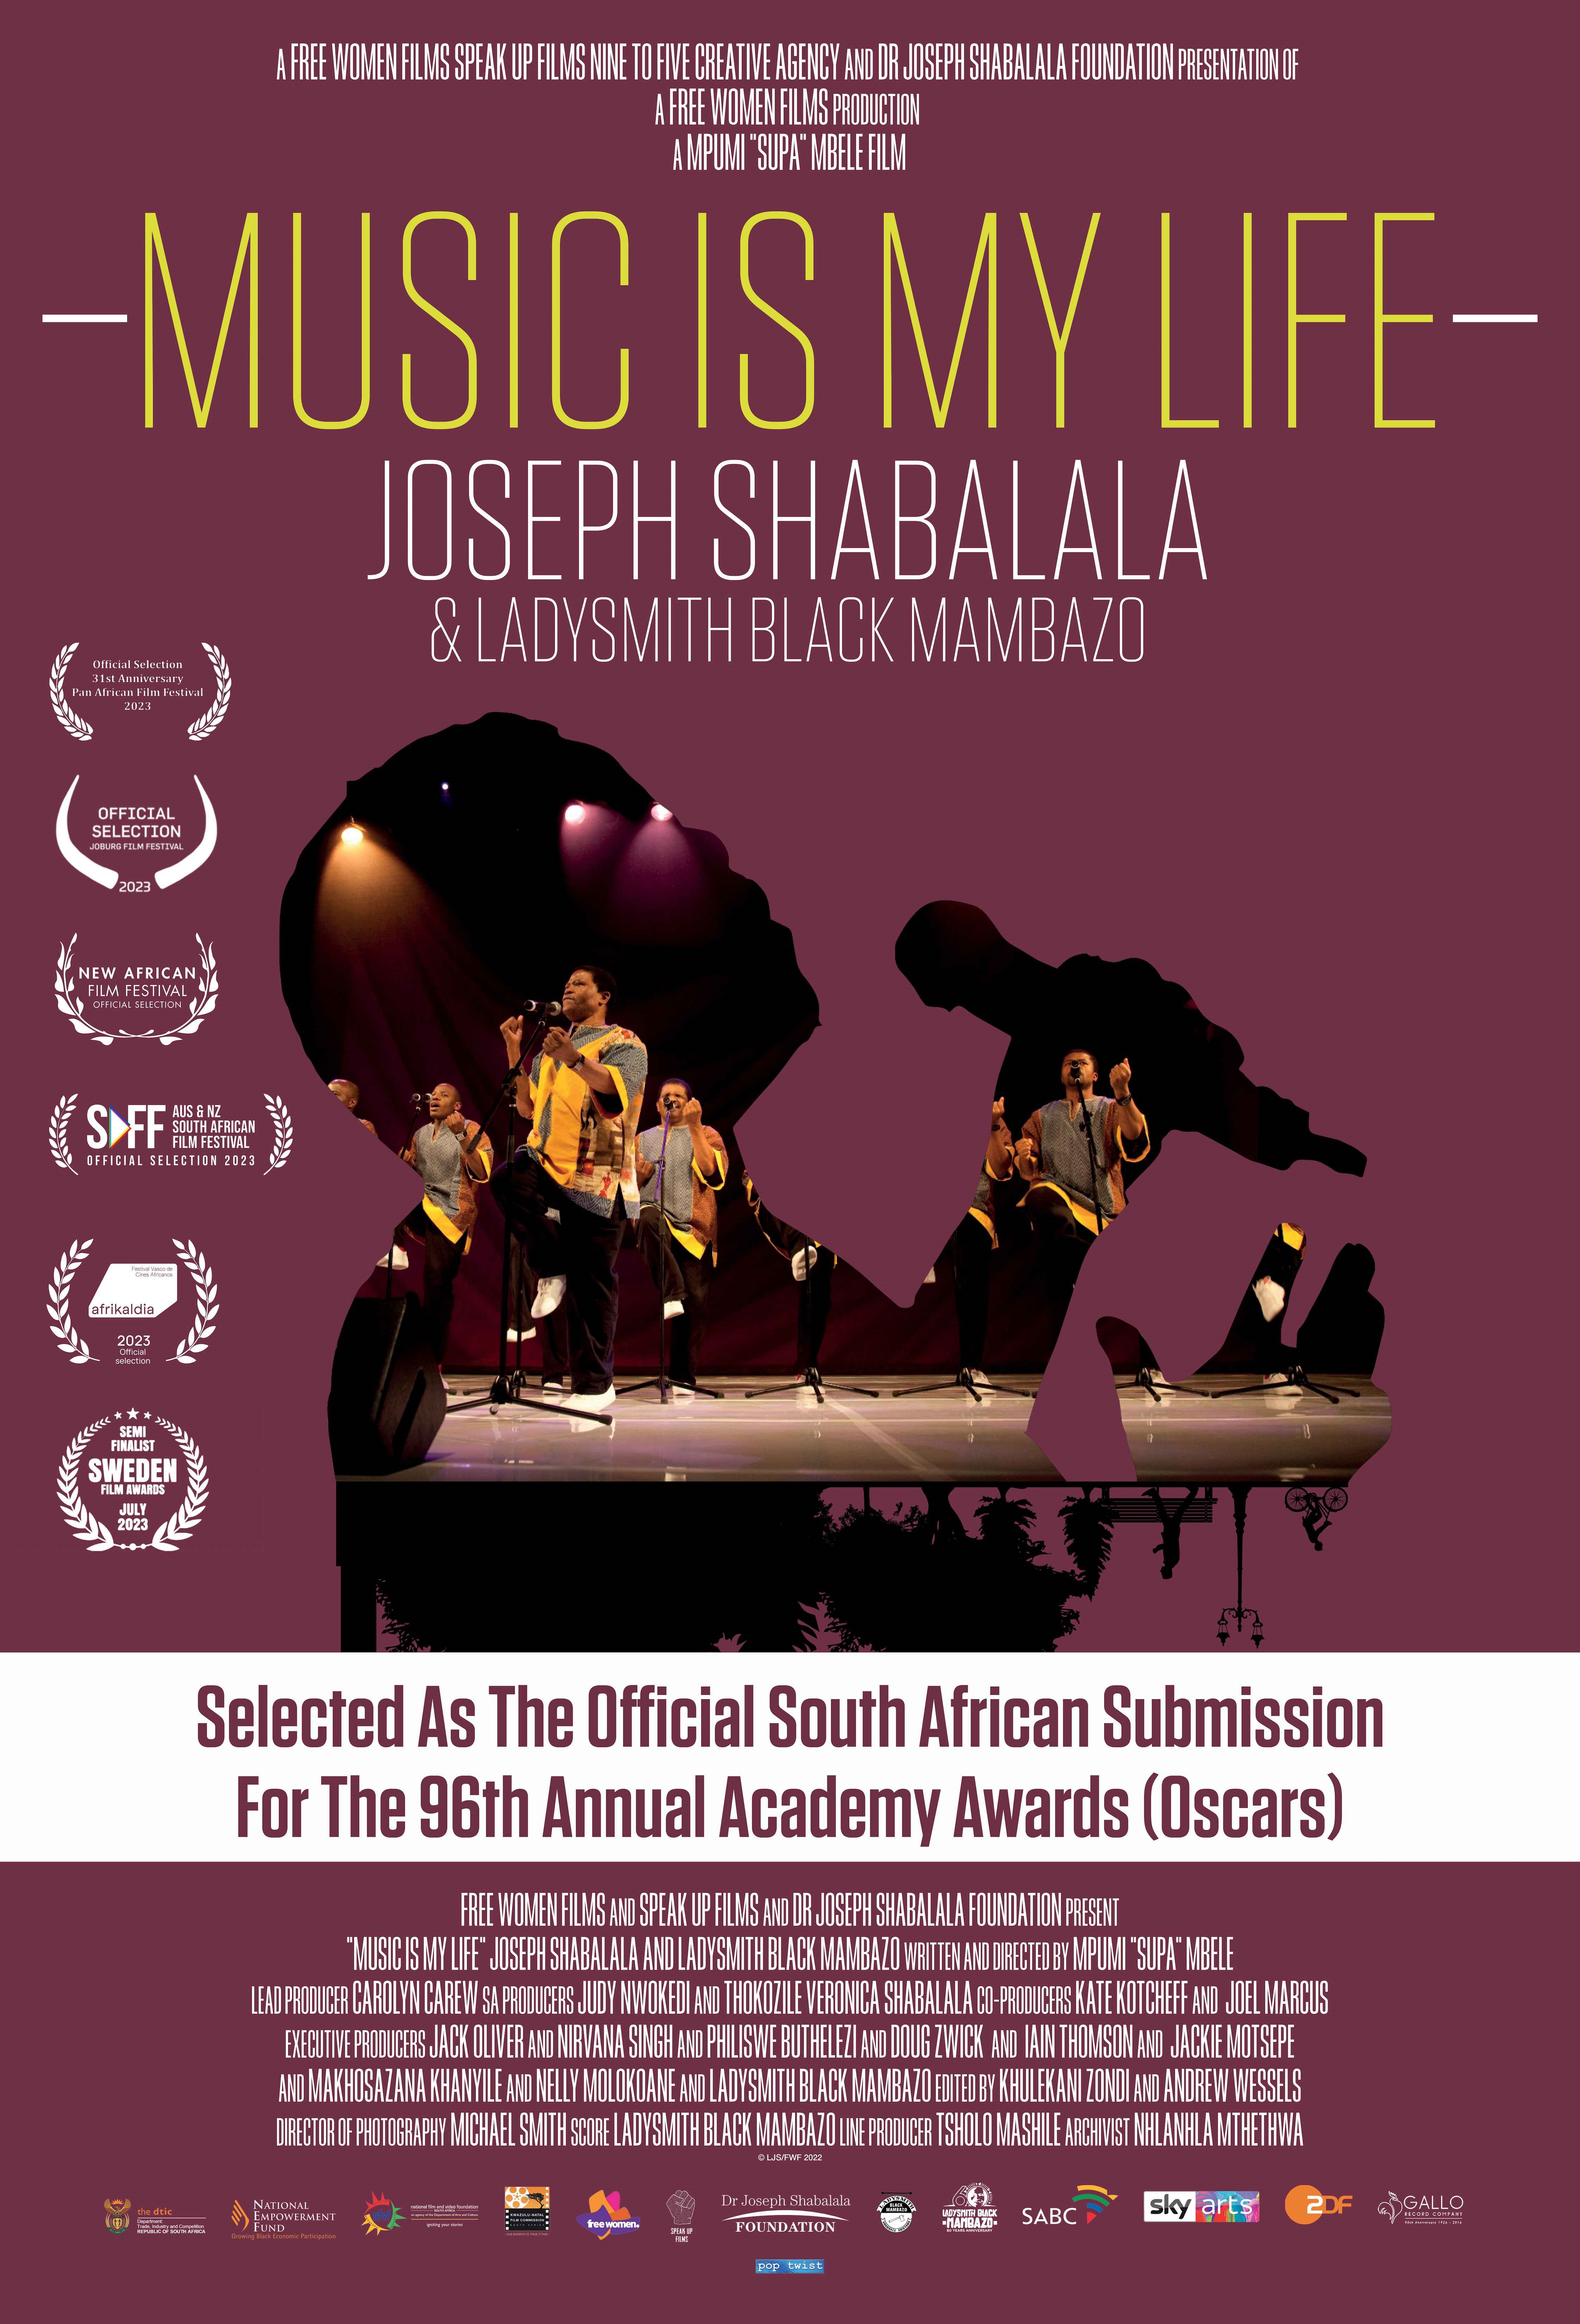 Ladysmith Black Mambazo level up from Grammy victory to Oscar hopes with documentary